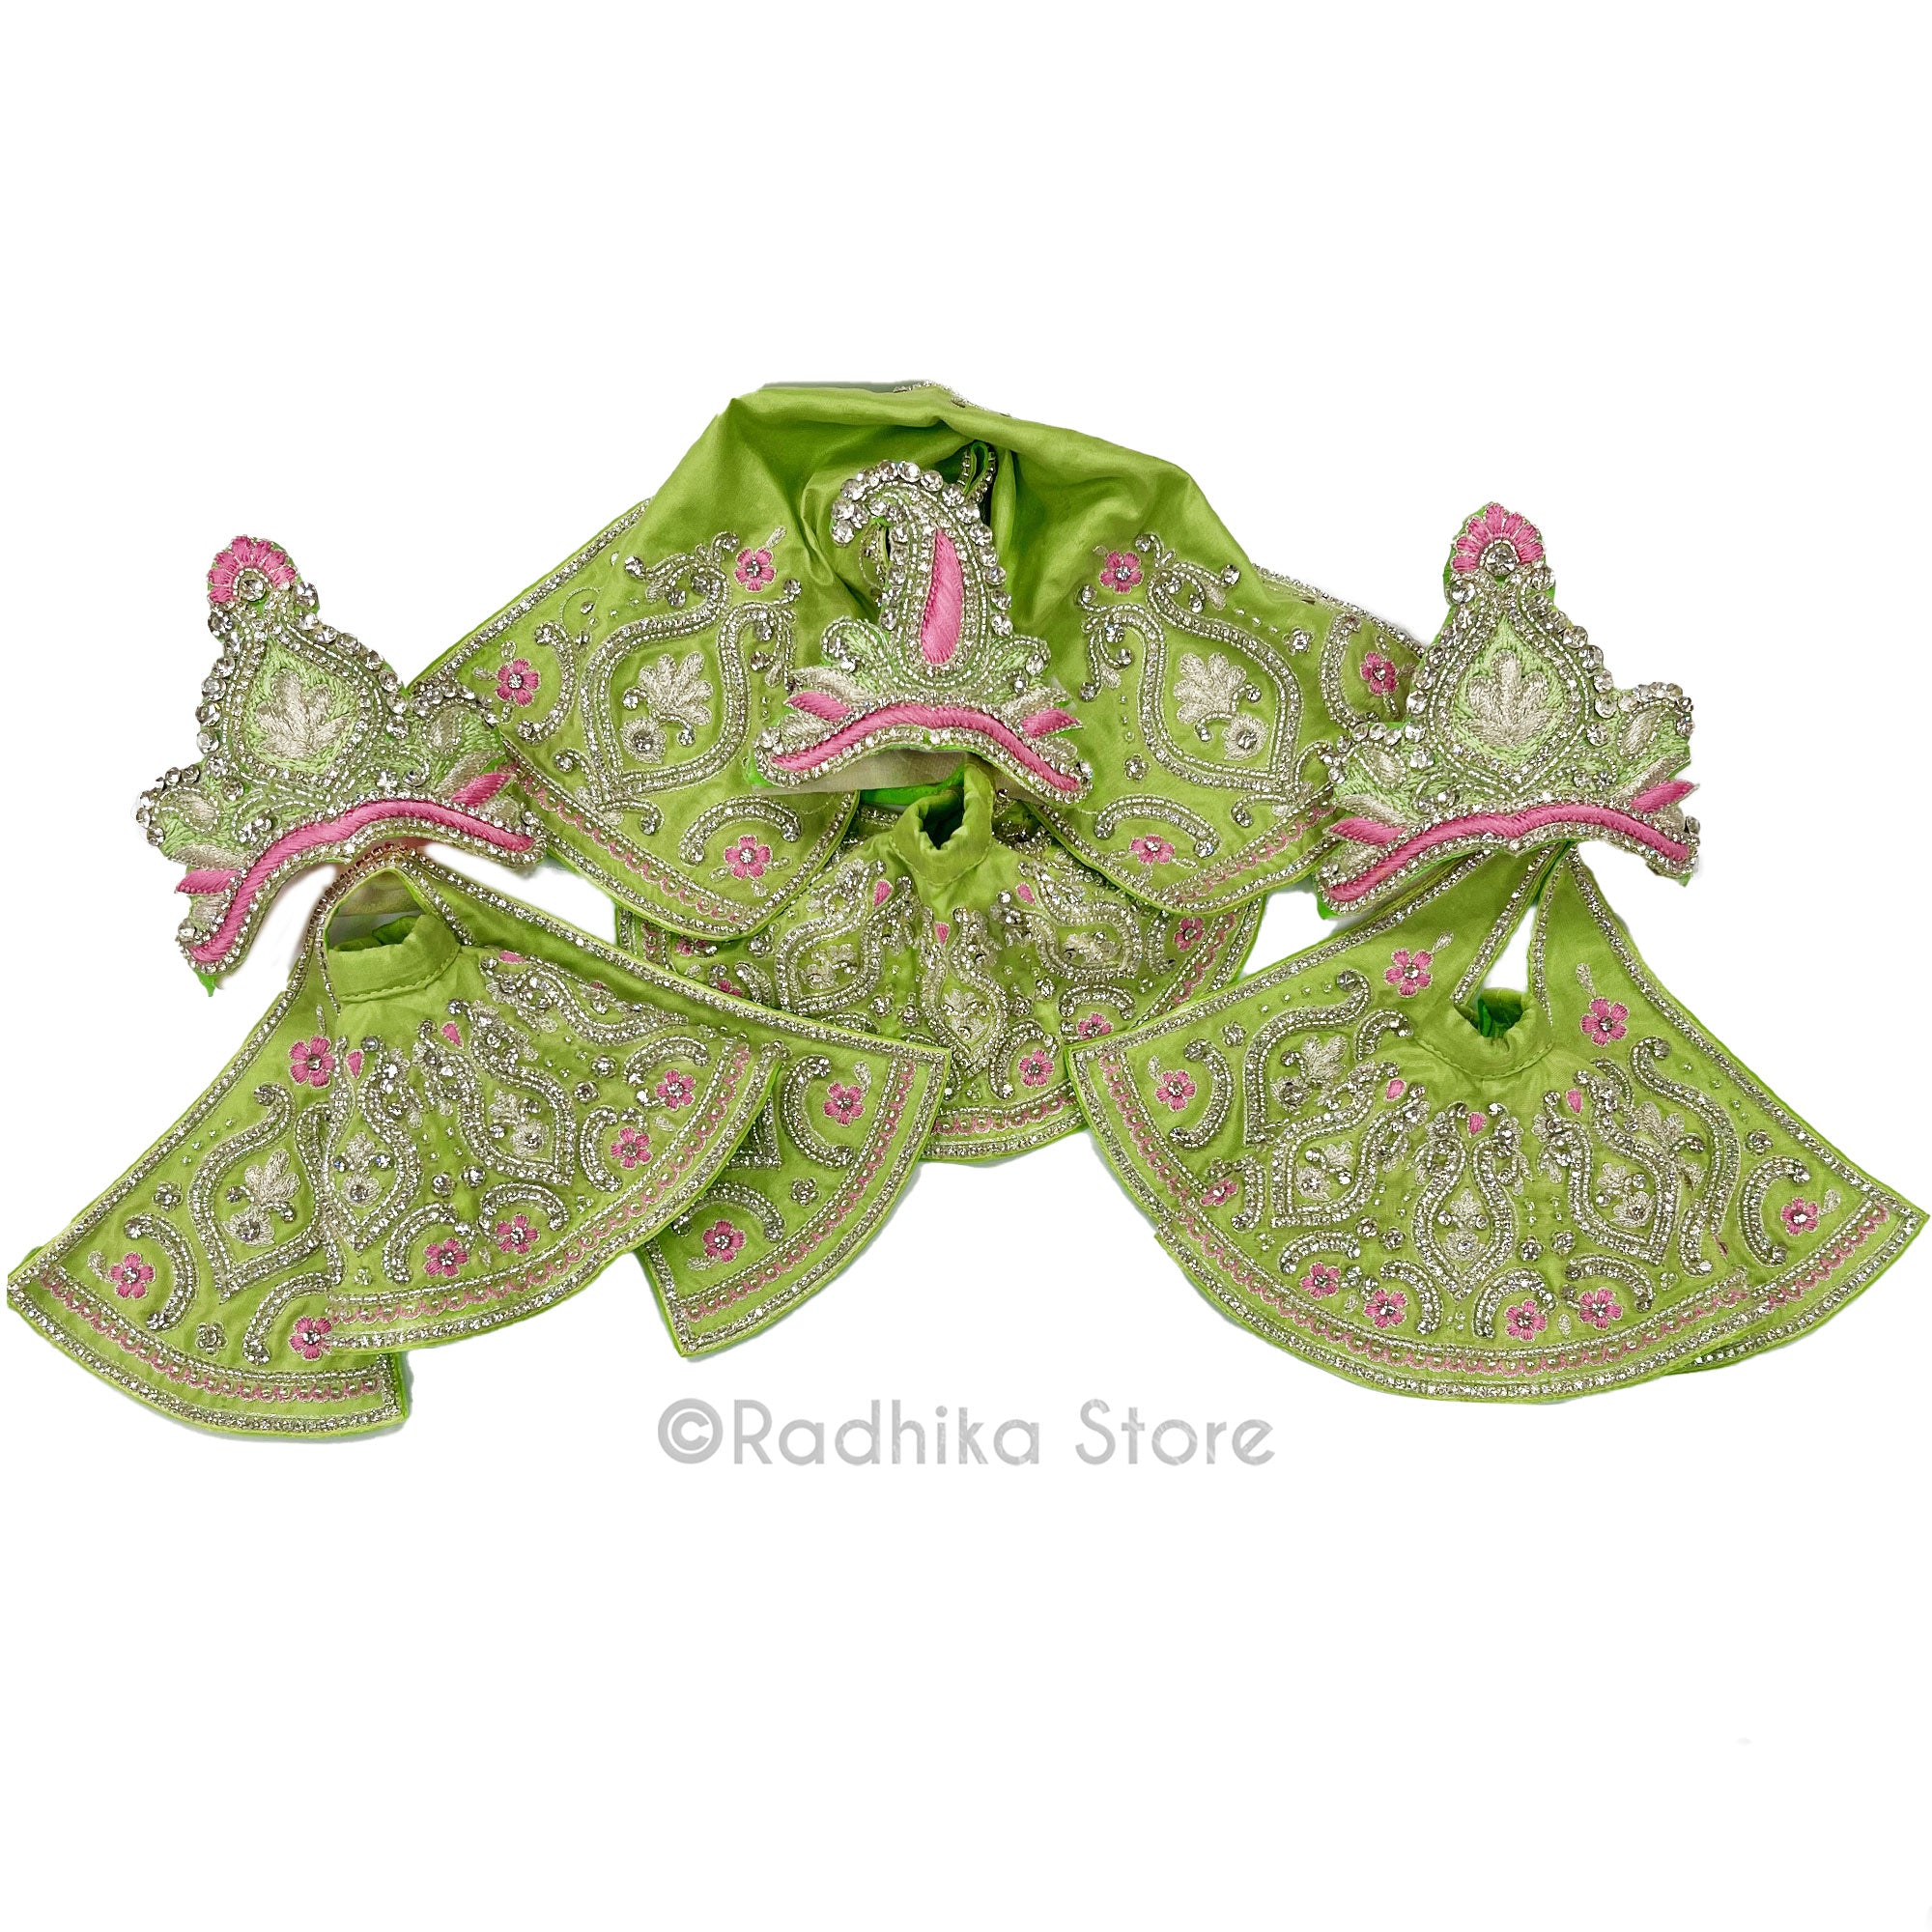 Glistening Vrinda Kund - Green - Silk - Jagannath Baladeva Subhadra Deity Outfit